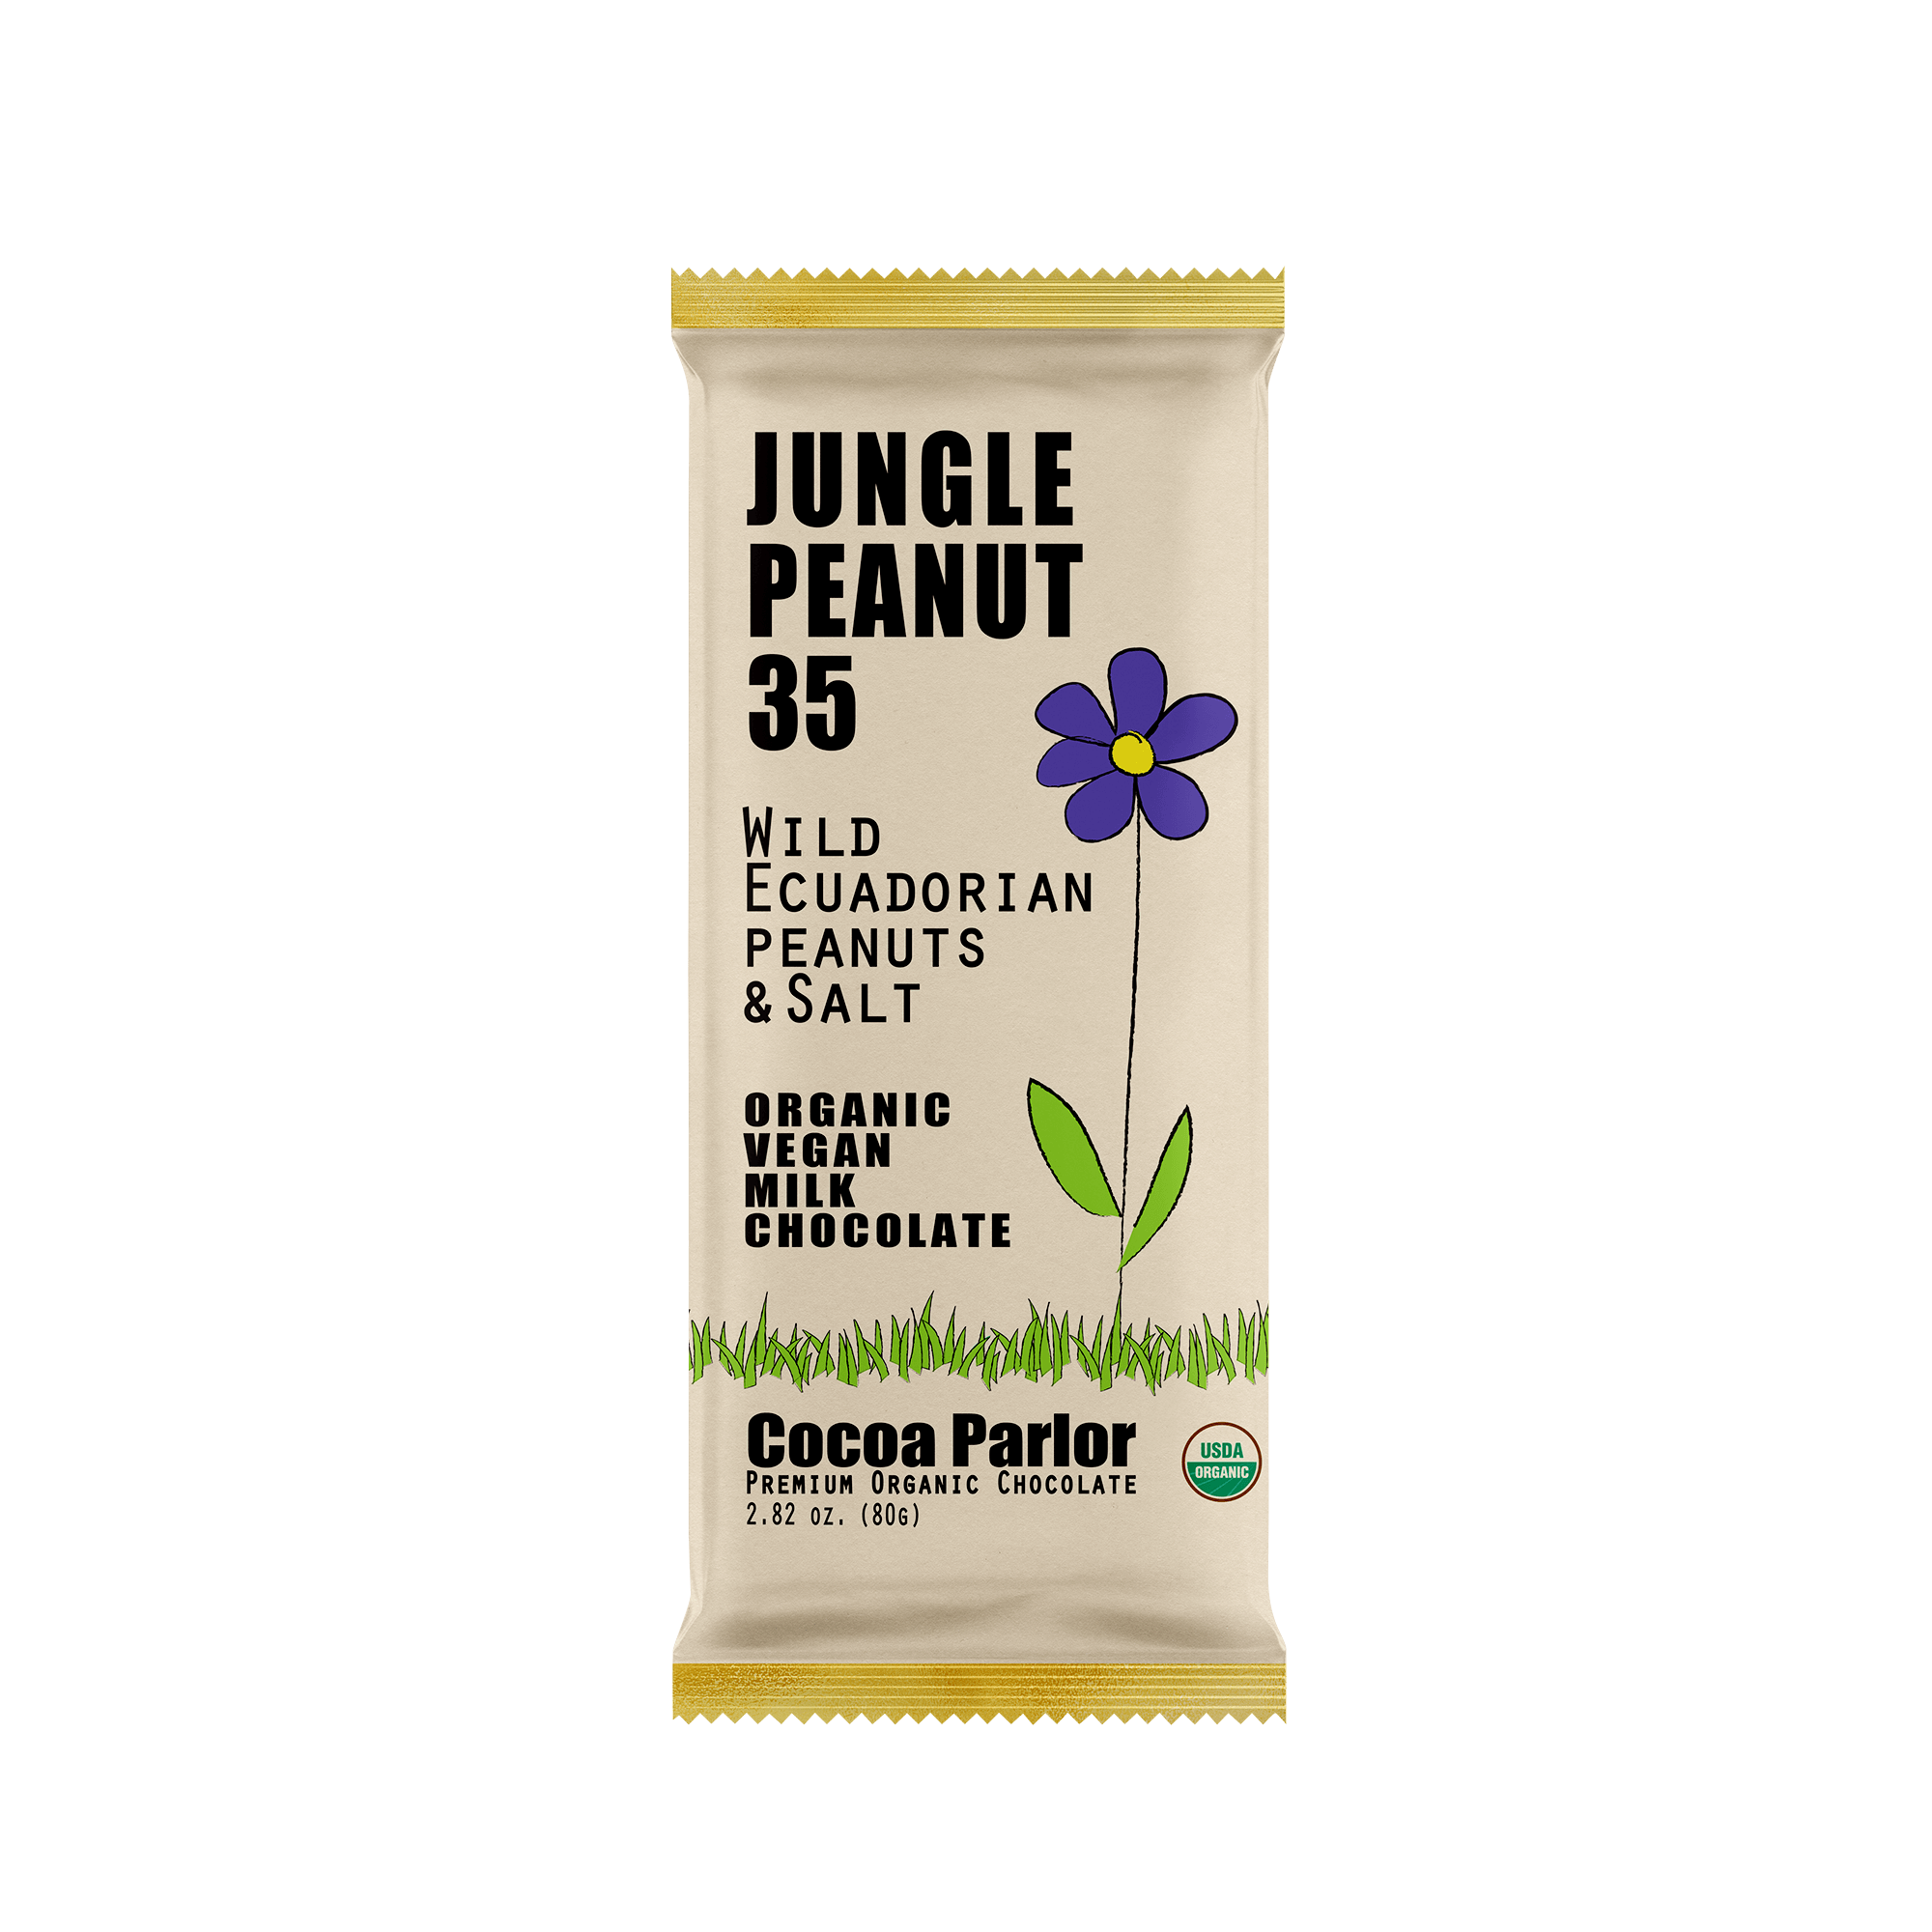 Jungle Peanut 35